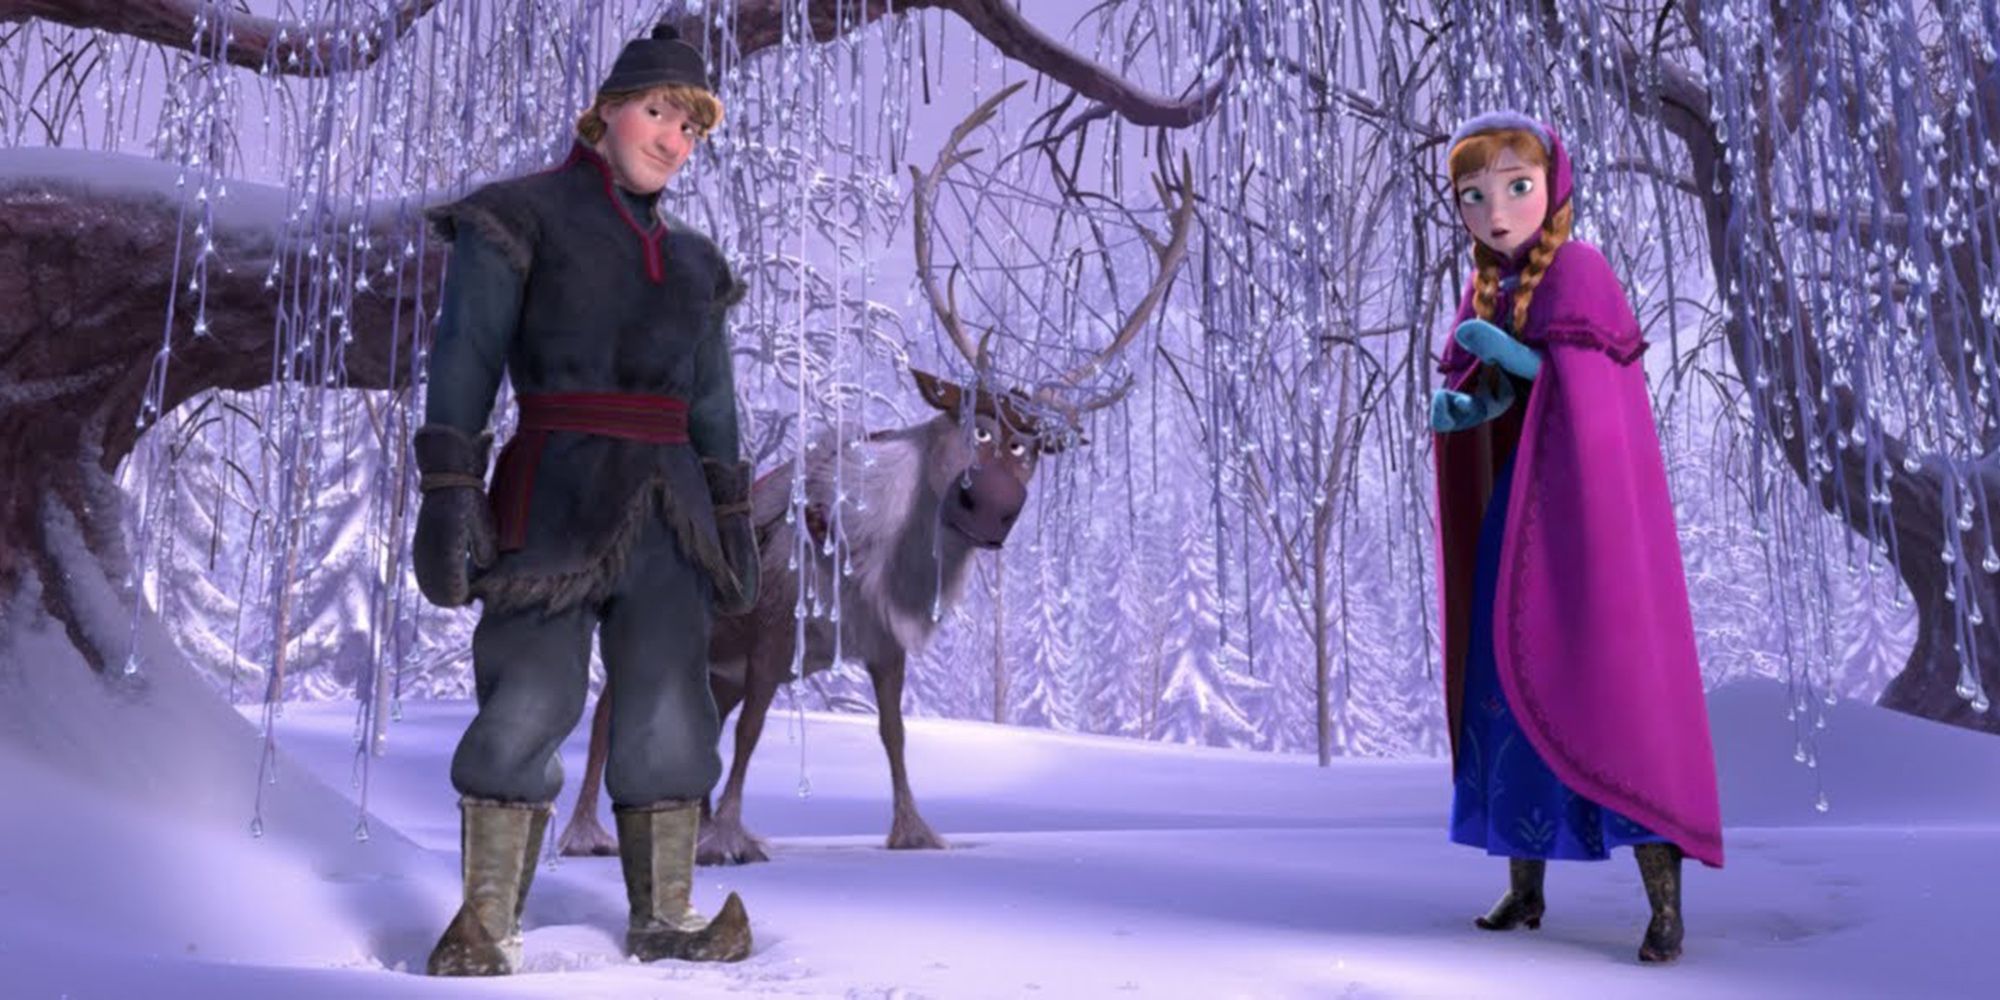 Olaf's Frozen Adventure has its own advent calendar